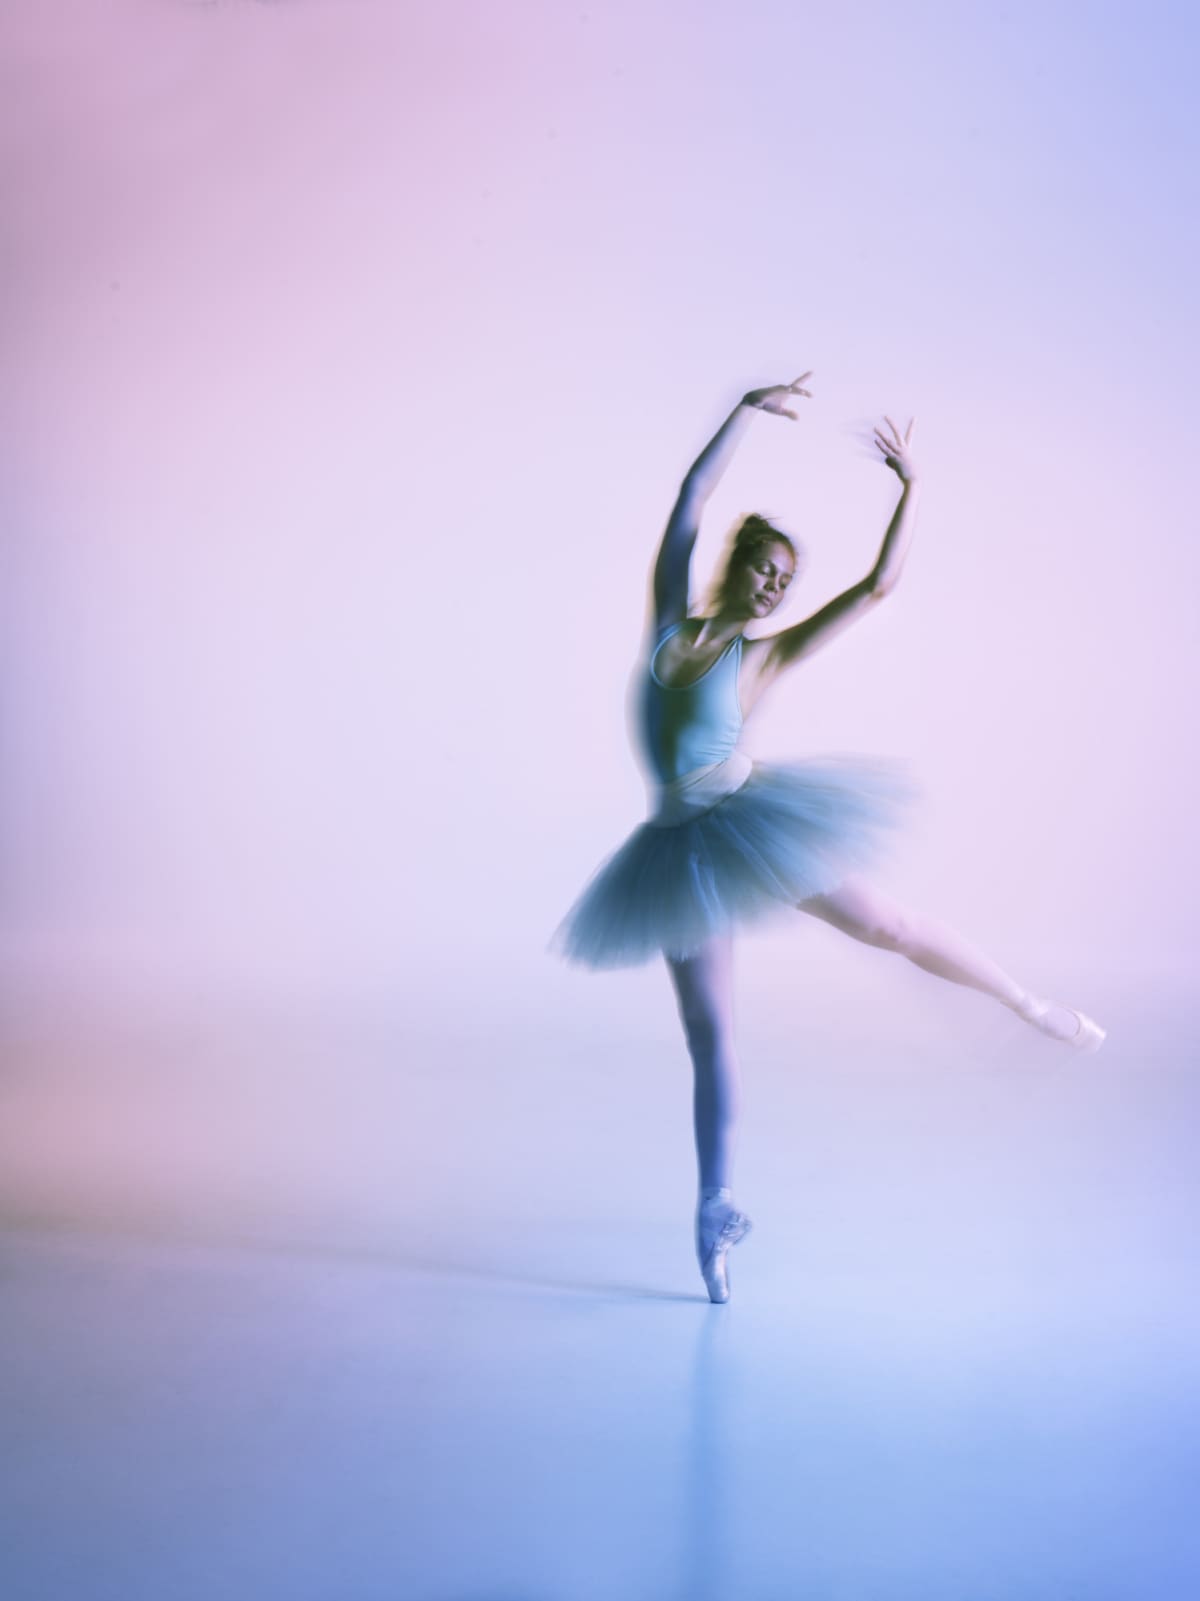 Ballet dancer long exposure doing pirouette